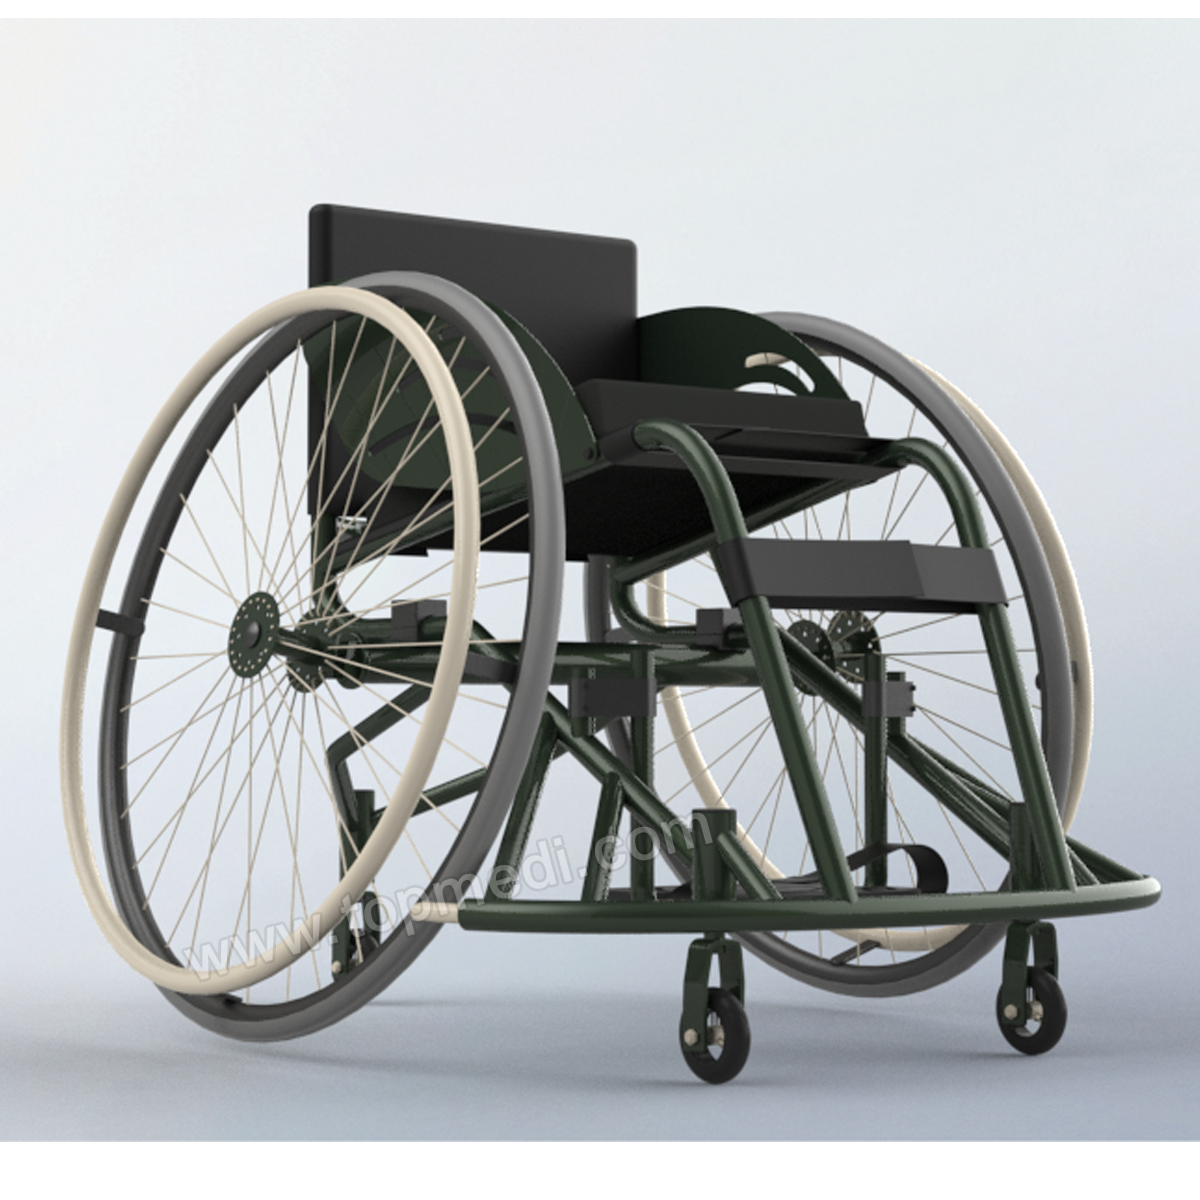 Precautions for using a wheelchair